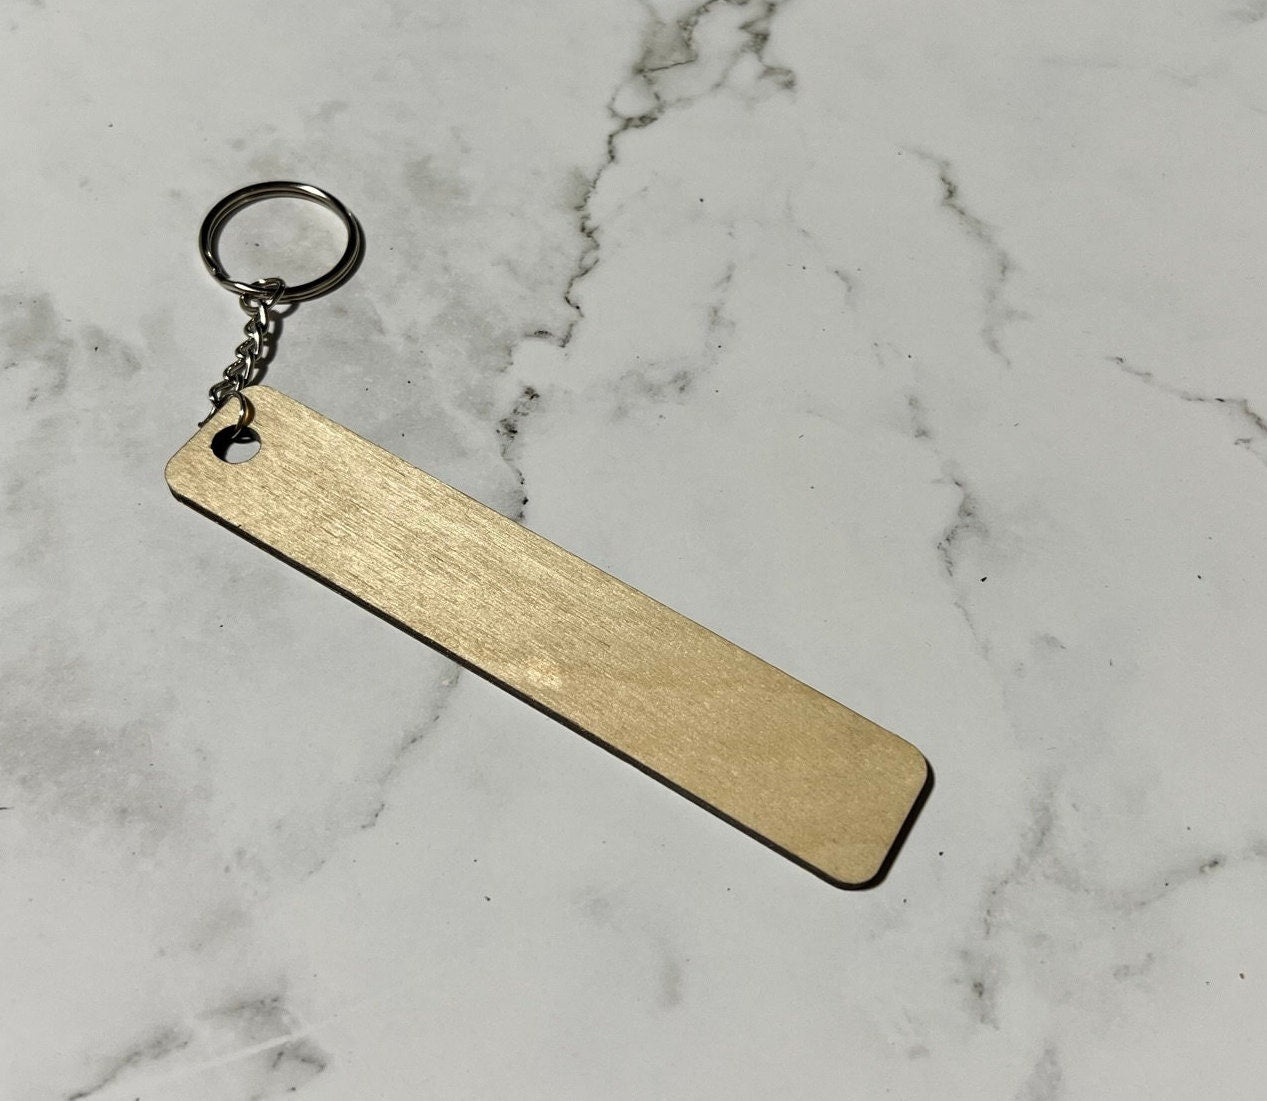 I love you Keychain | Inspirational Keychain || Custom Bag Tag | Laser Engraved Keychain